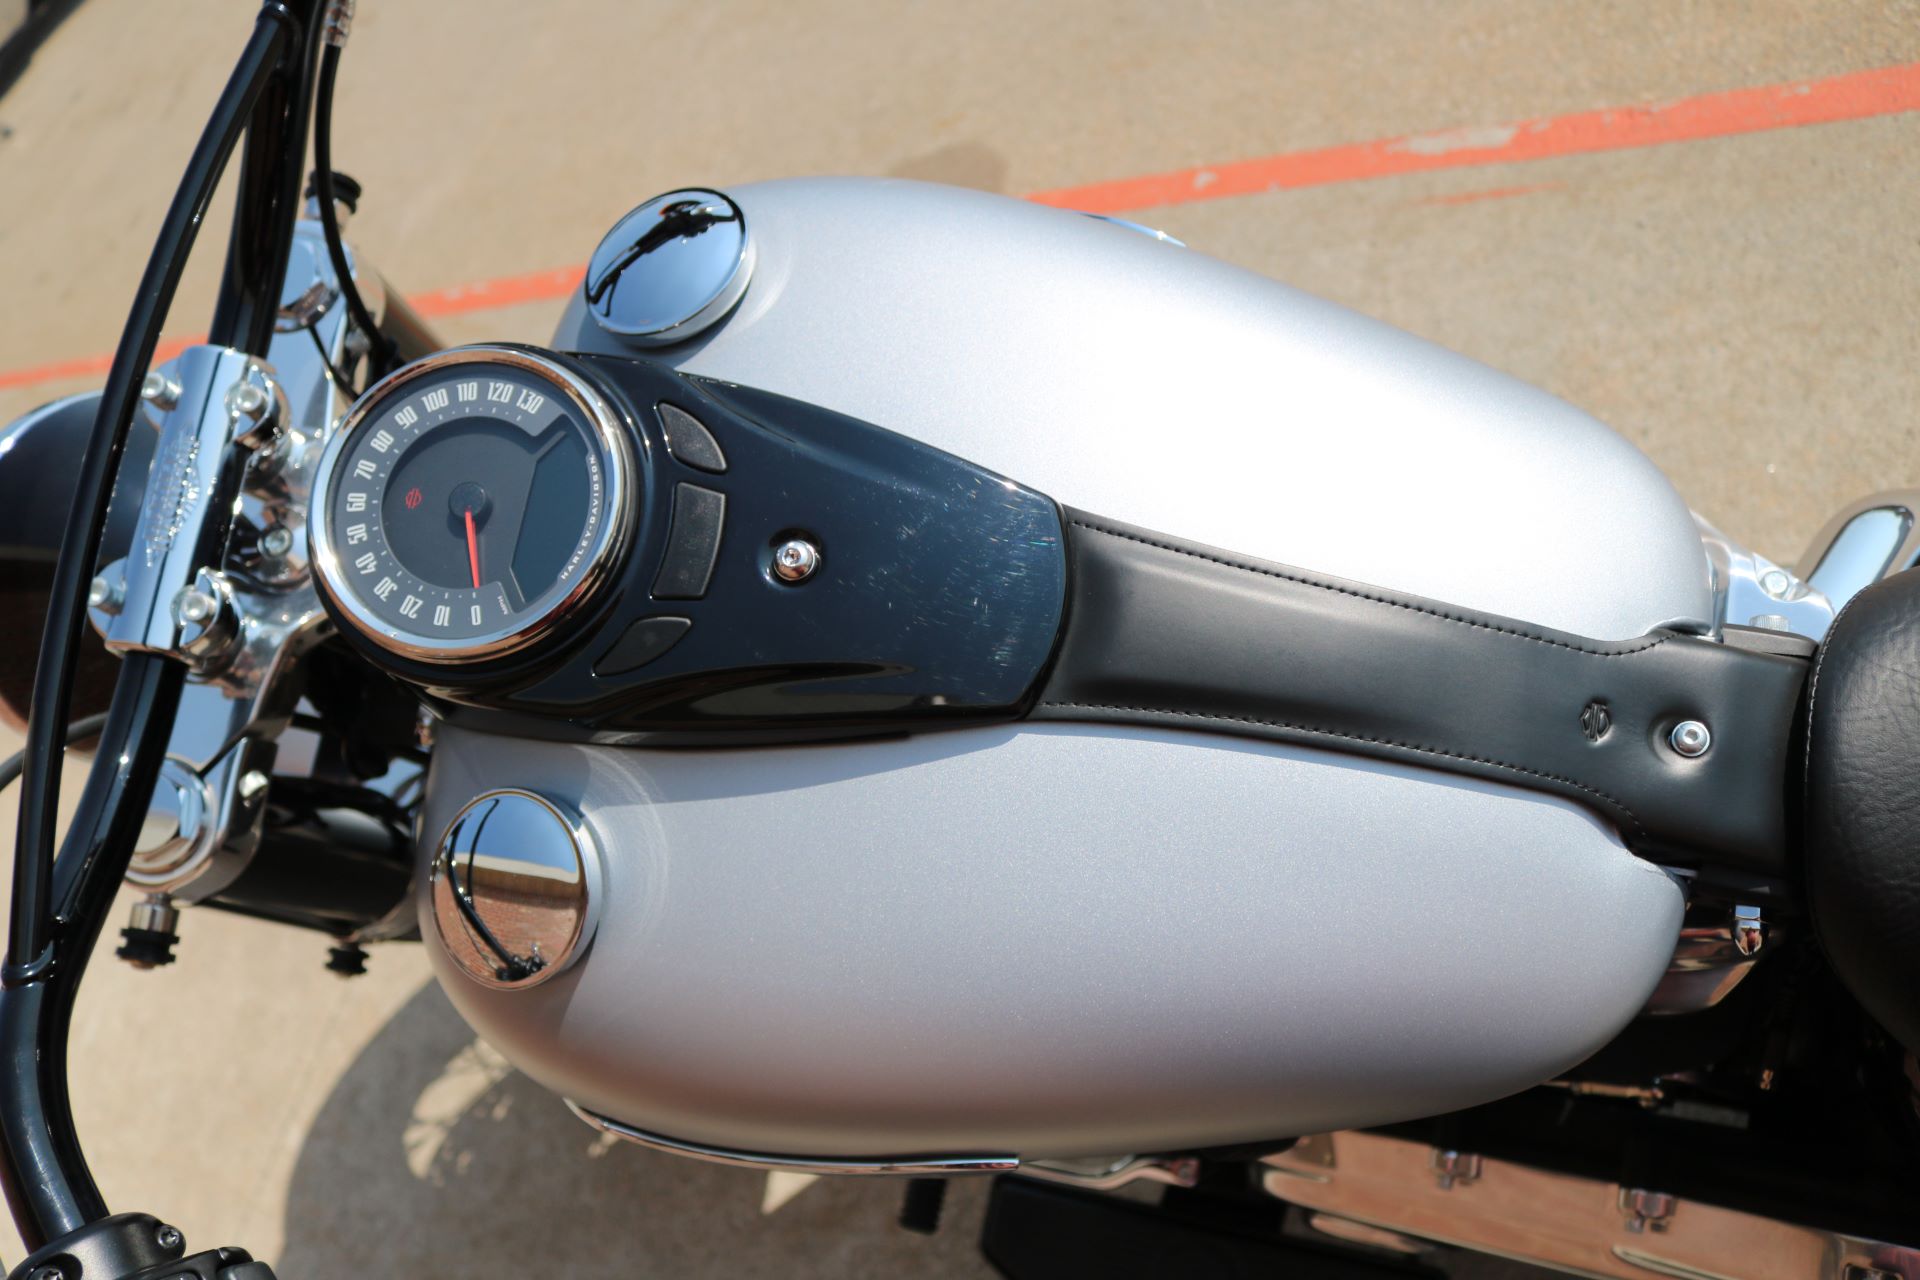 2020 Harley-Davidson Softail Slim® in Ames, Iowa - Photo 8